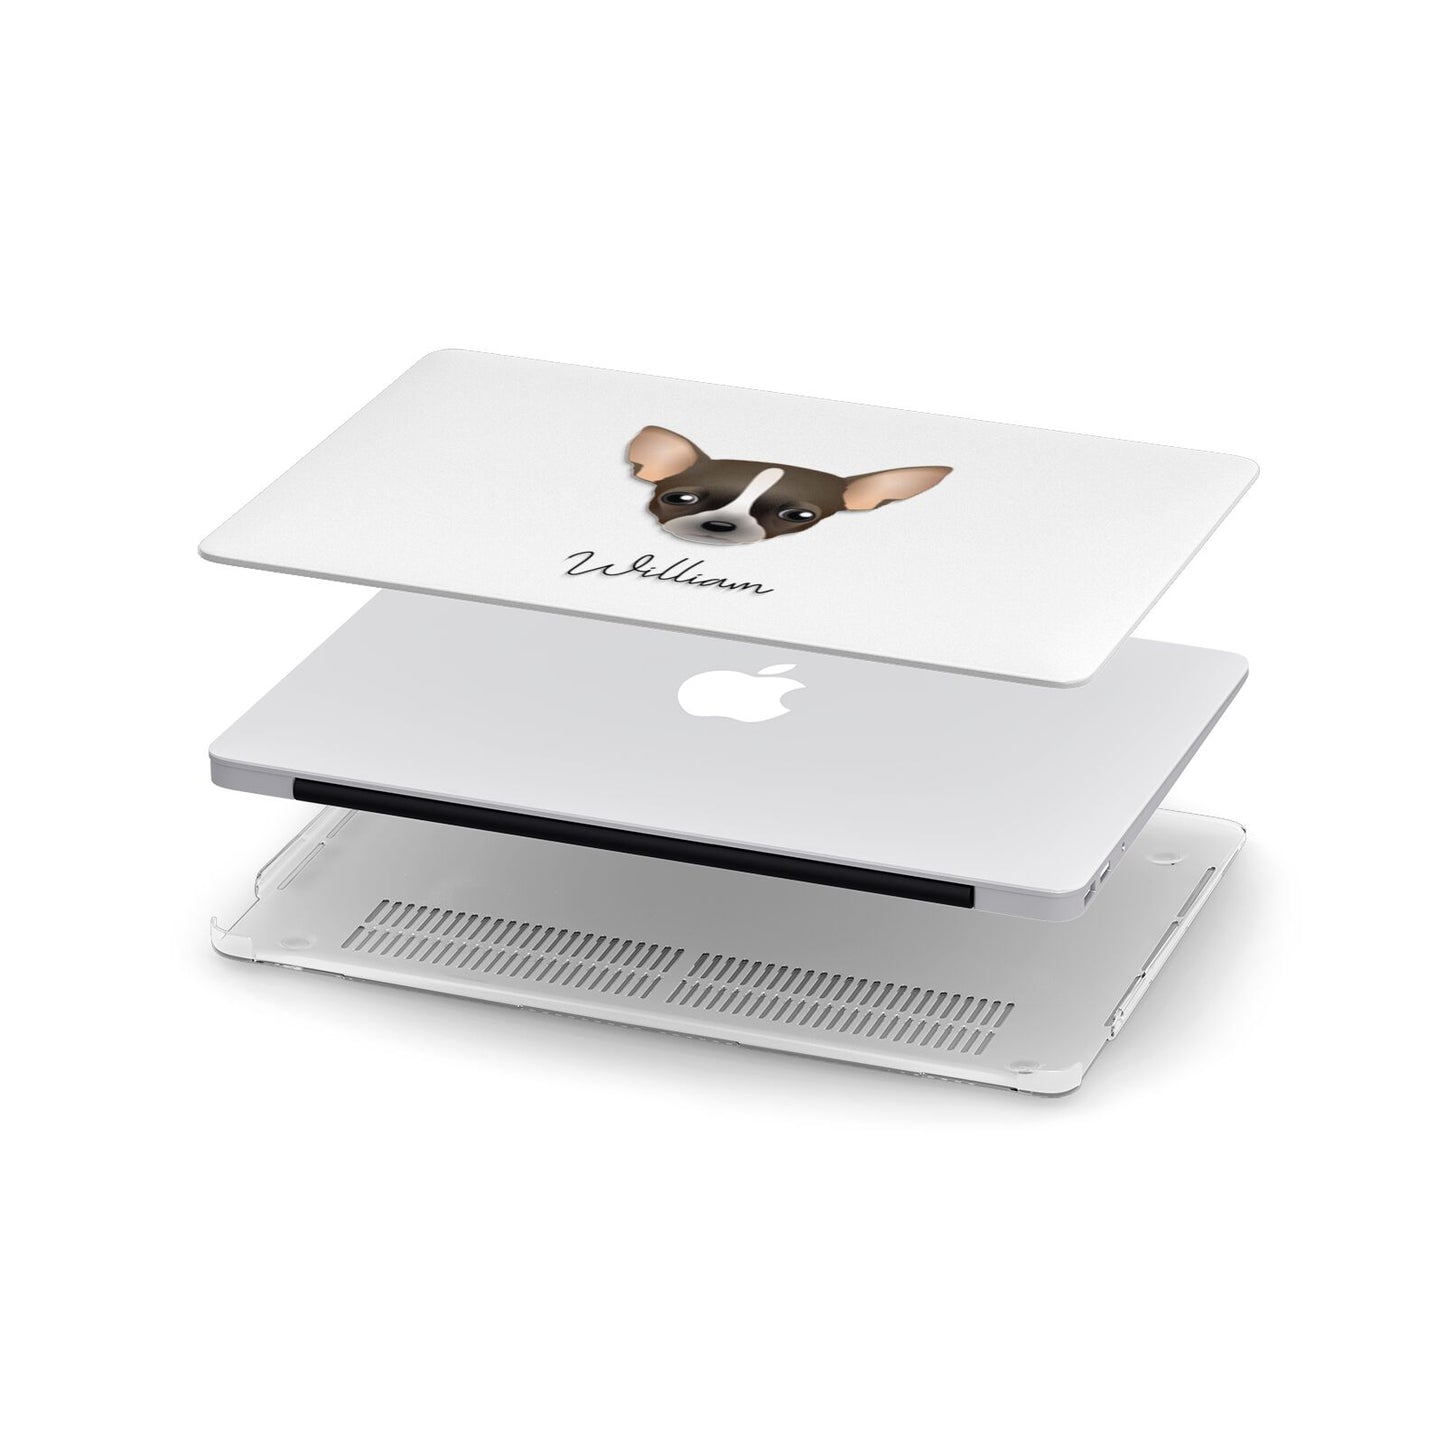 Chihuahua Personalised Apple MacBook Case in Detail